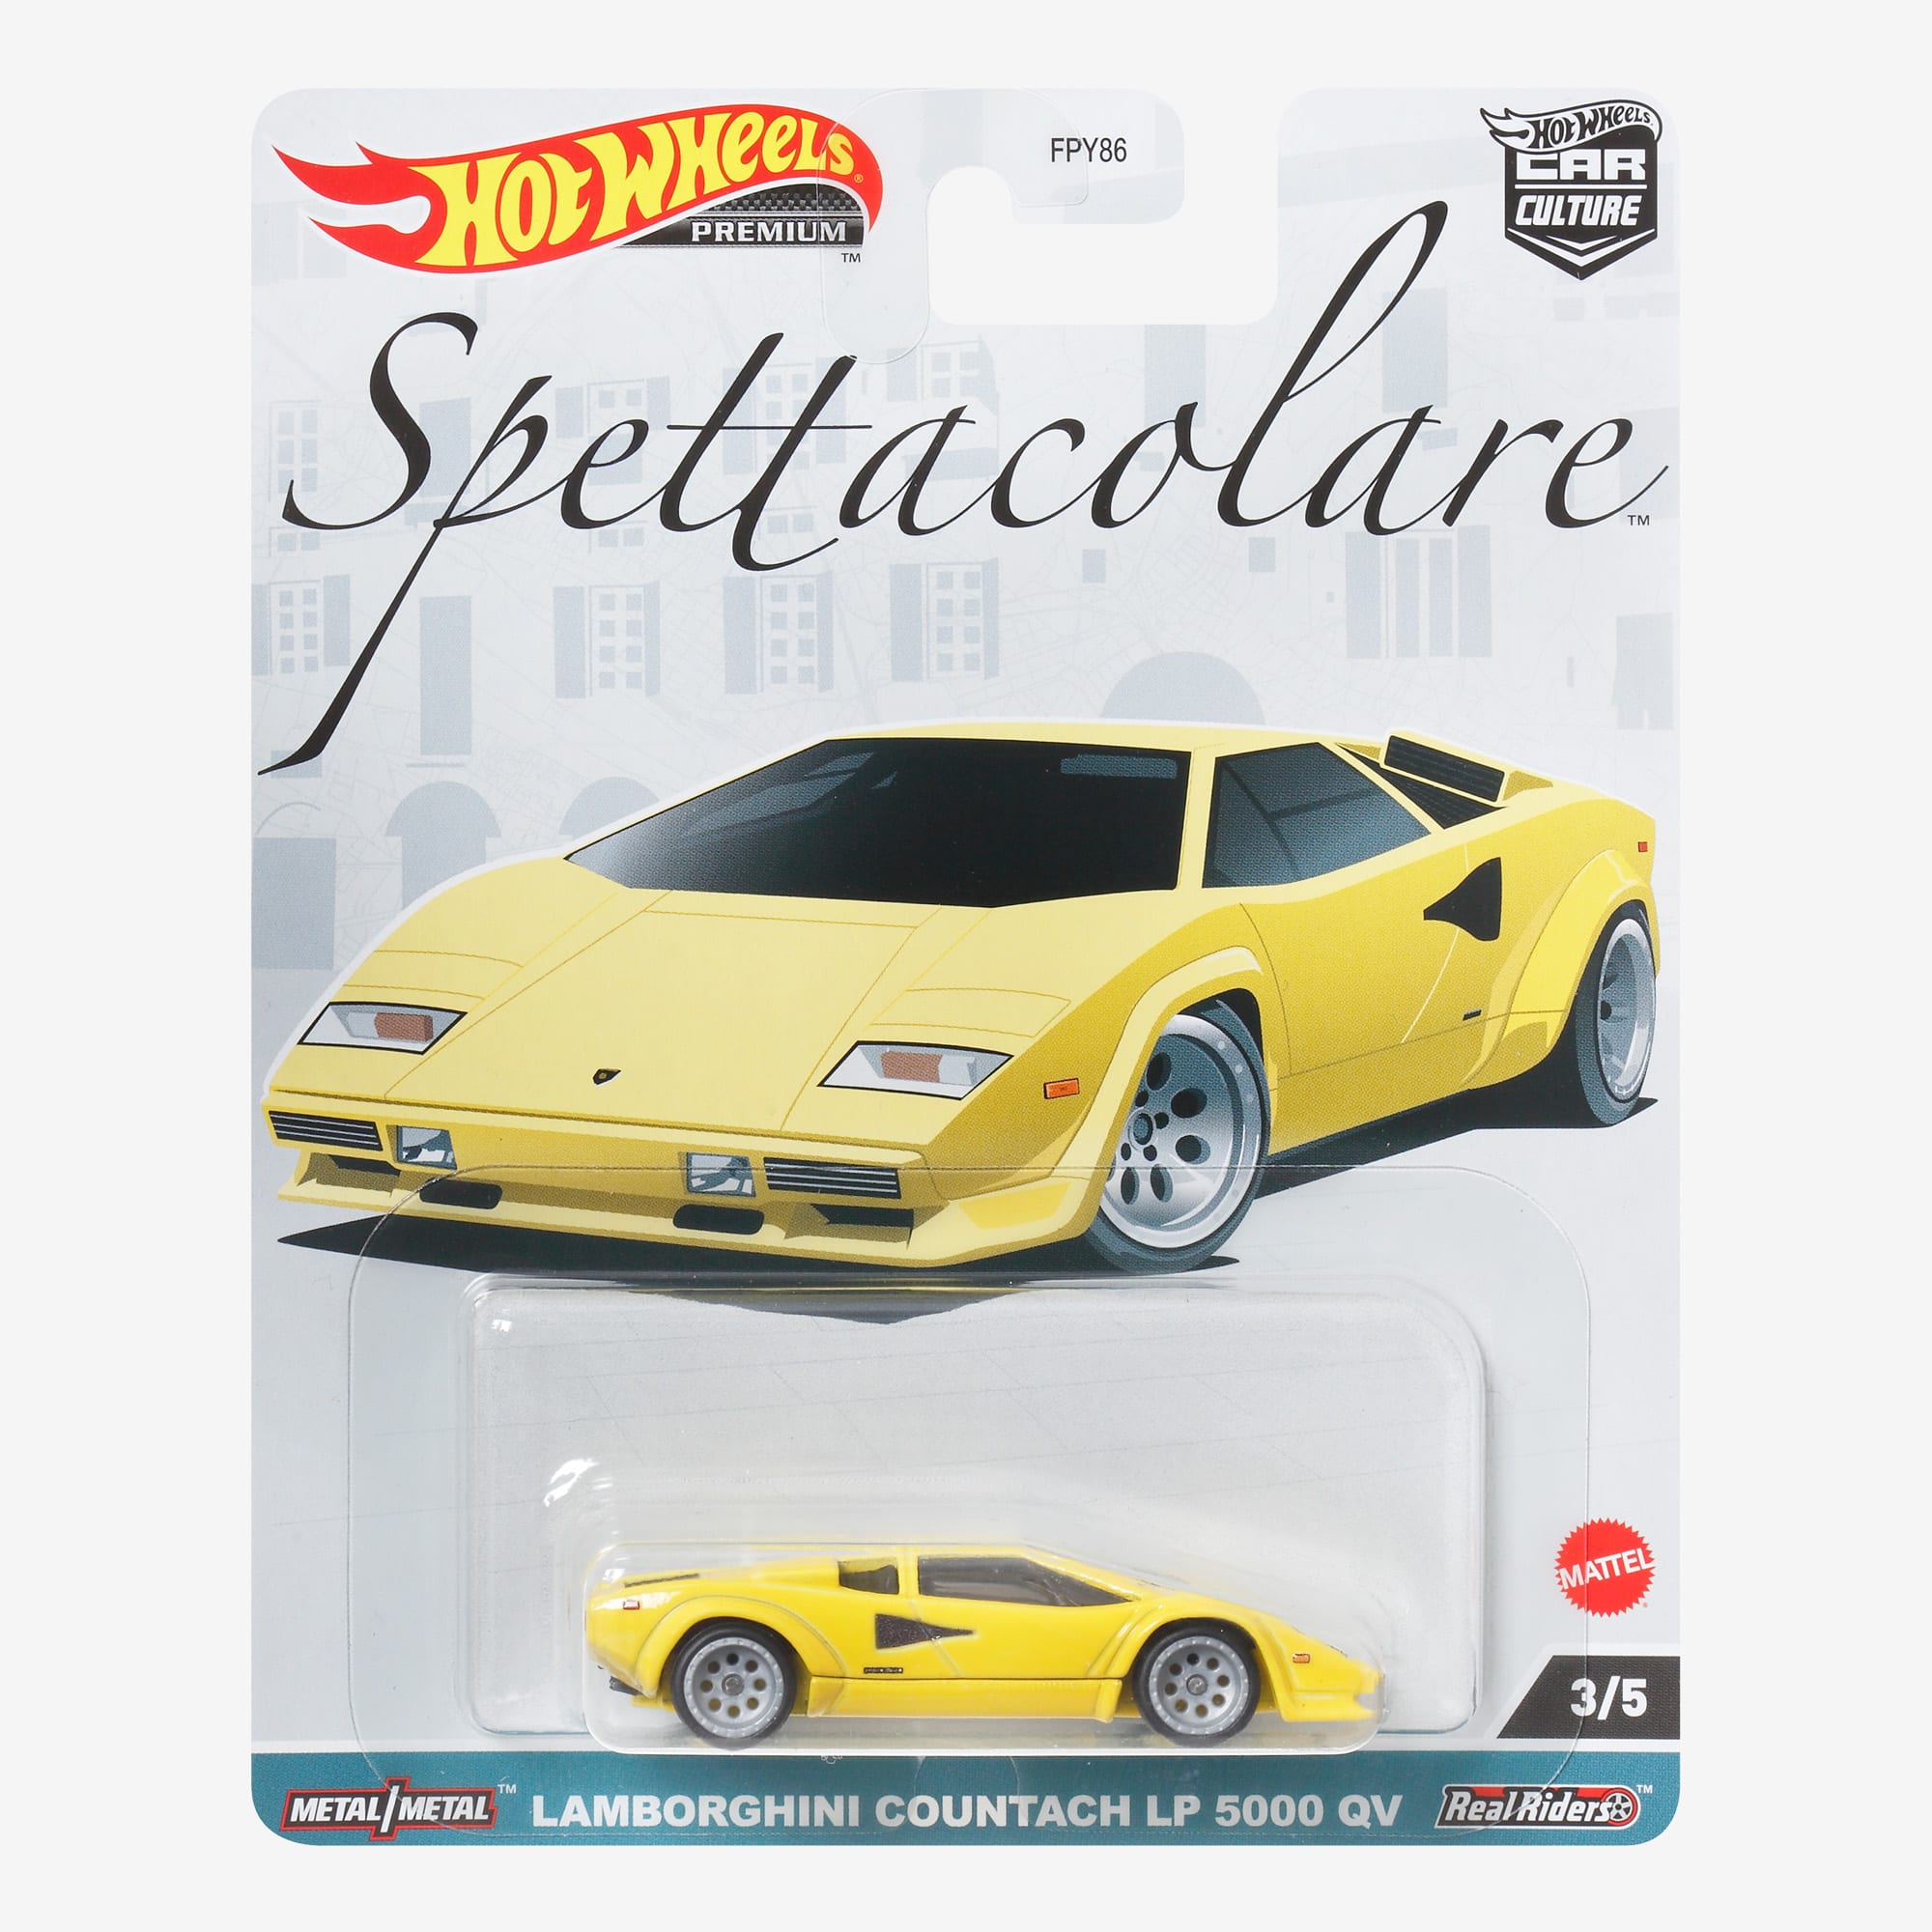 Hot Wheels Premium Car Culture Speed Machines – McLaren 720S – Mattel  Creations